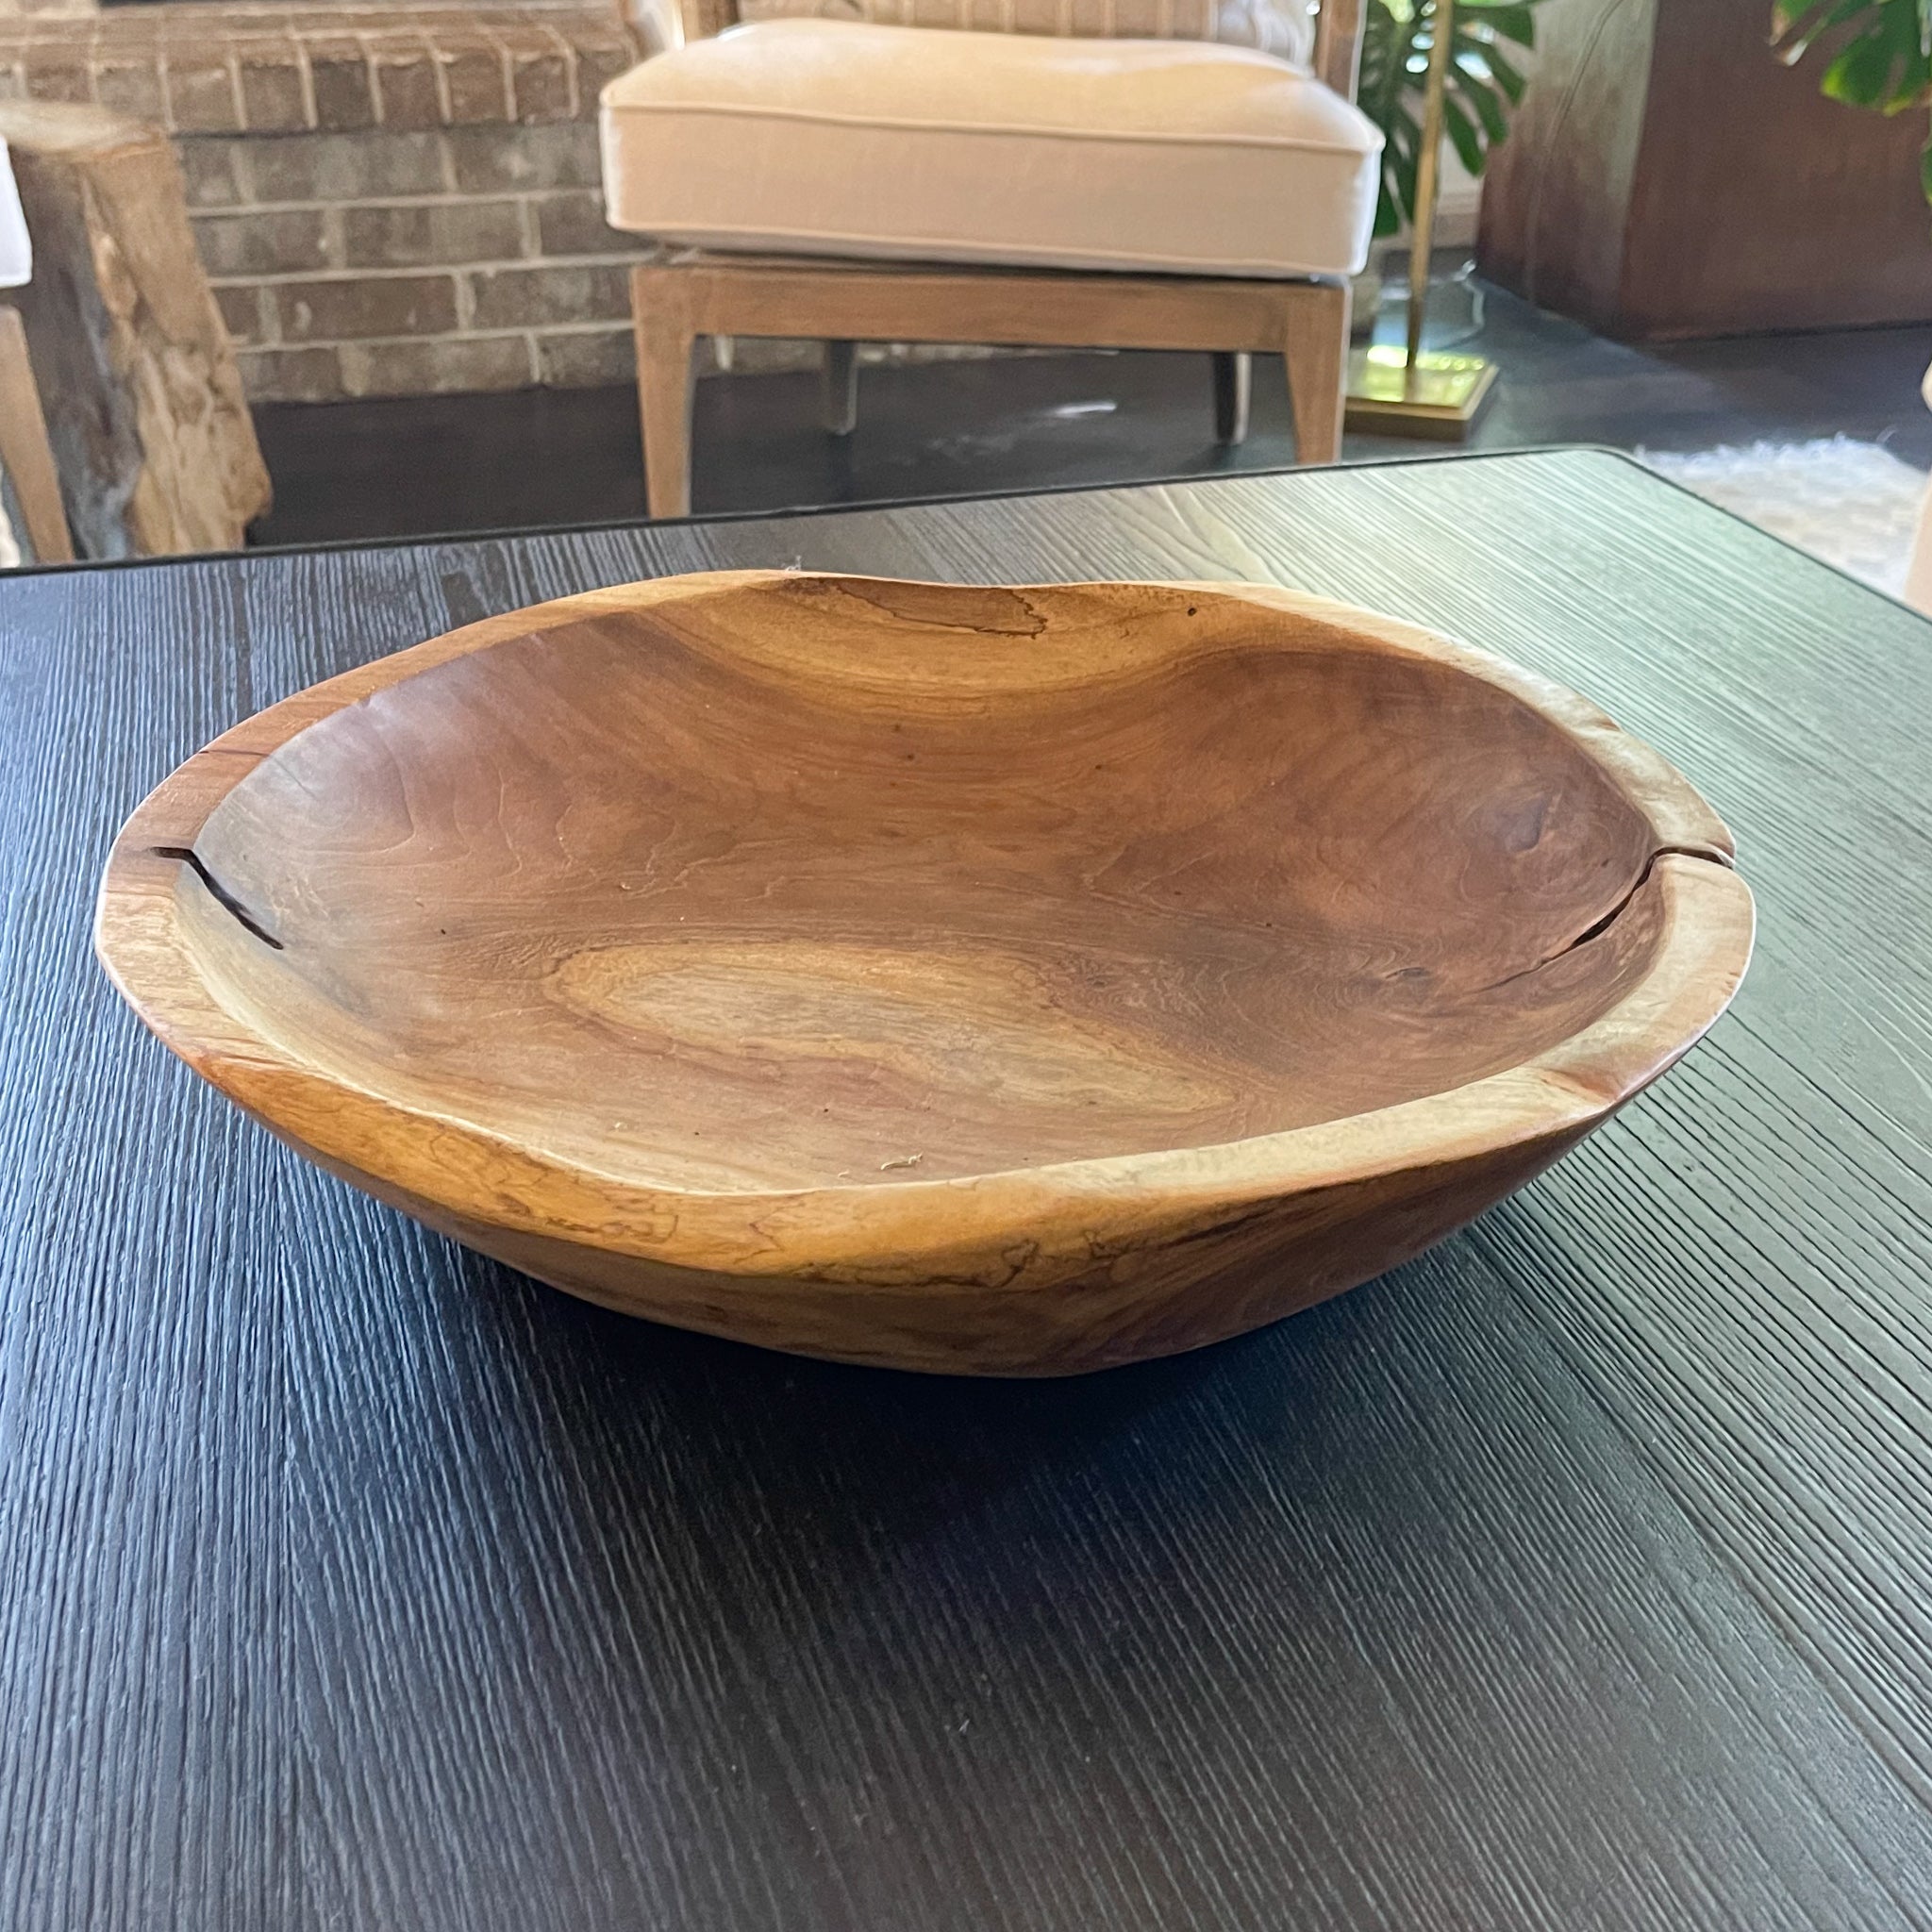 Teak Wood Coffee Table Bowl, Teak Wood Fruit Bowl, Teak Wood Home Accents